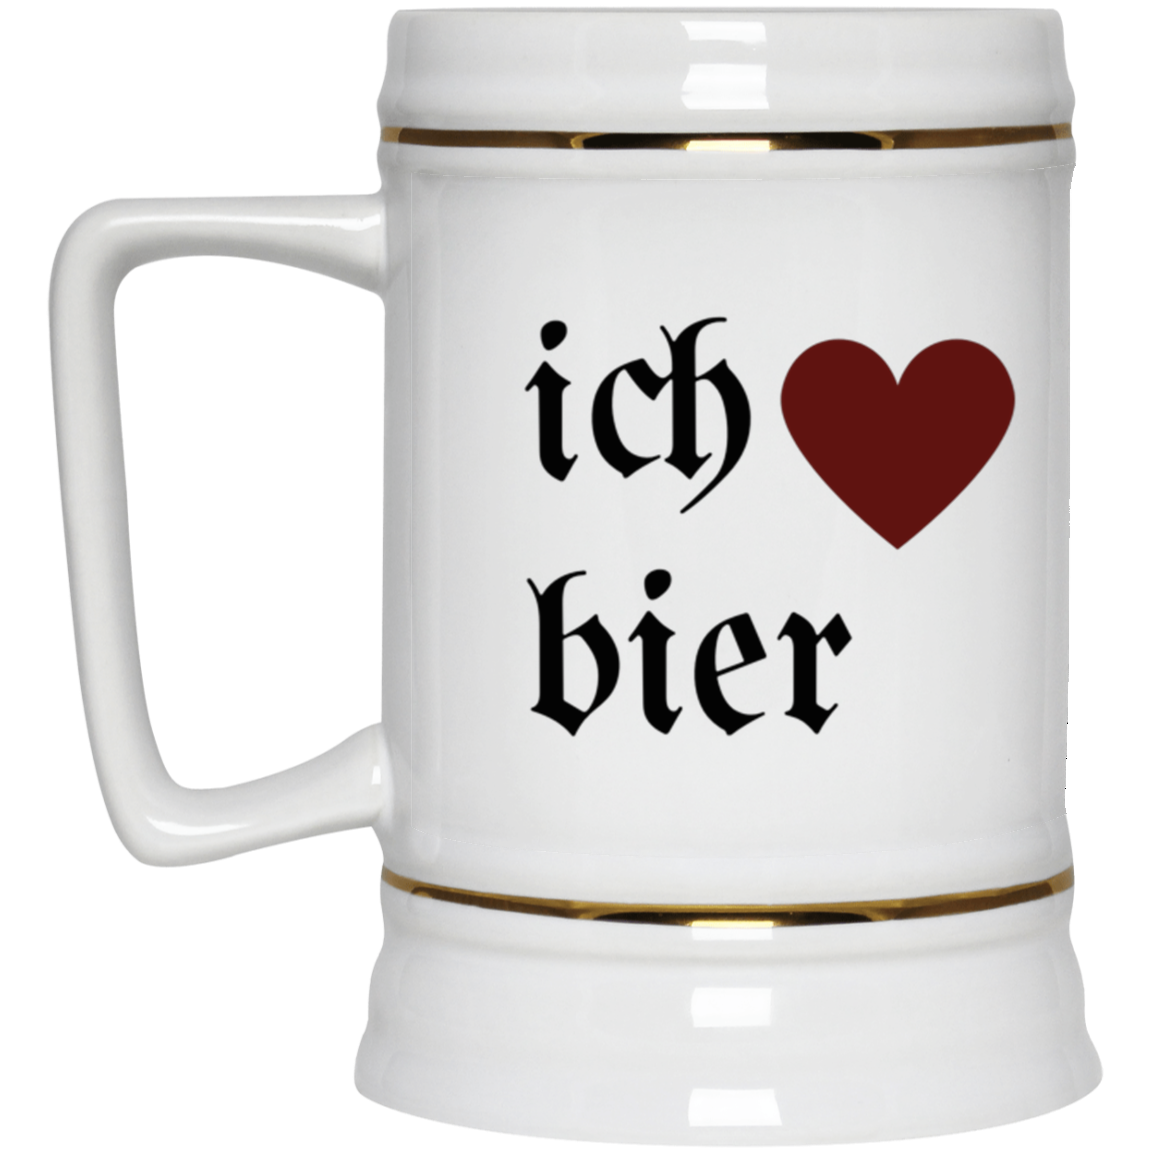 ich "heart" bier (I Love Beer) - Beer Stein 22oz.